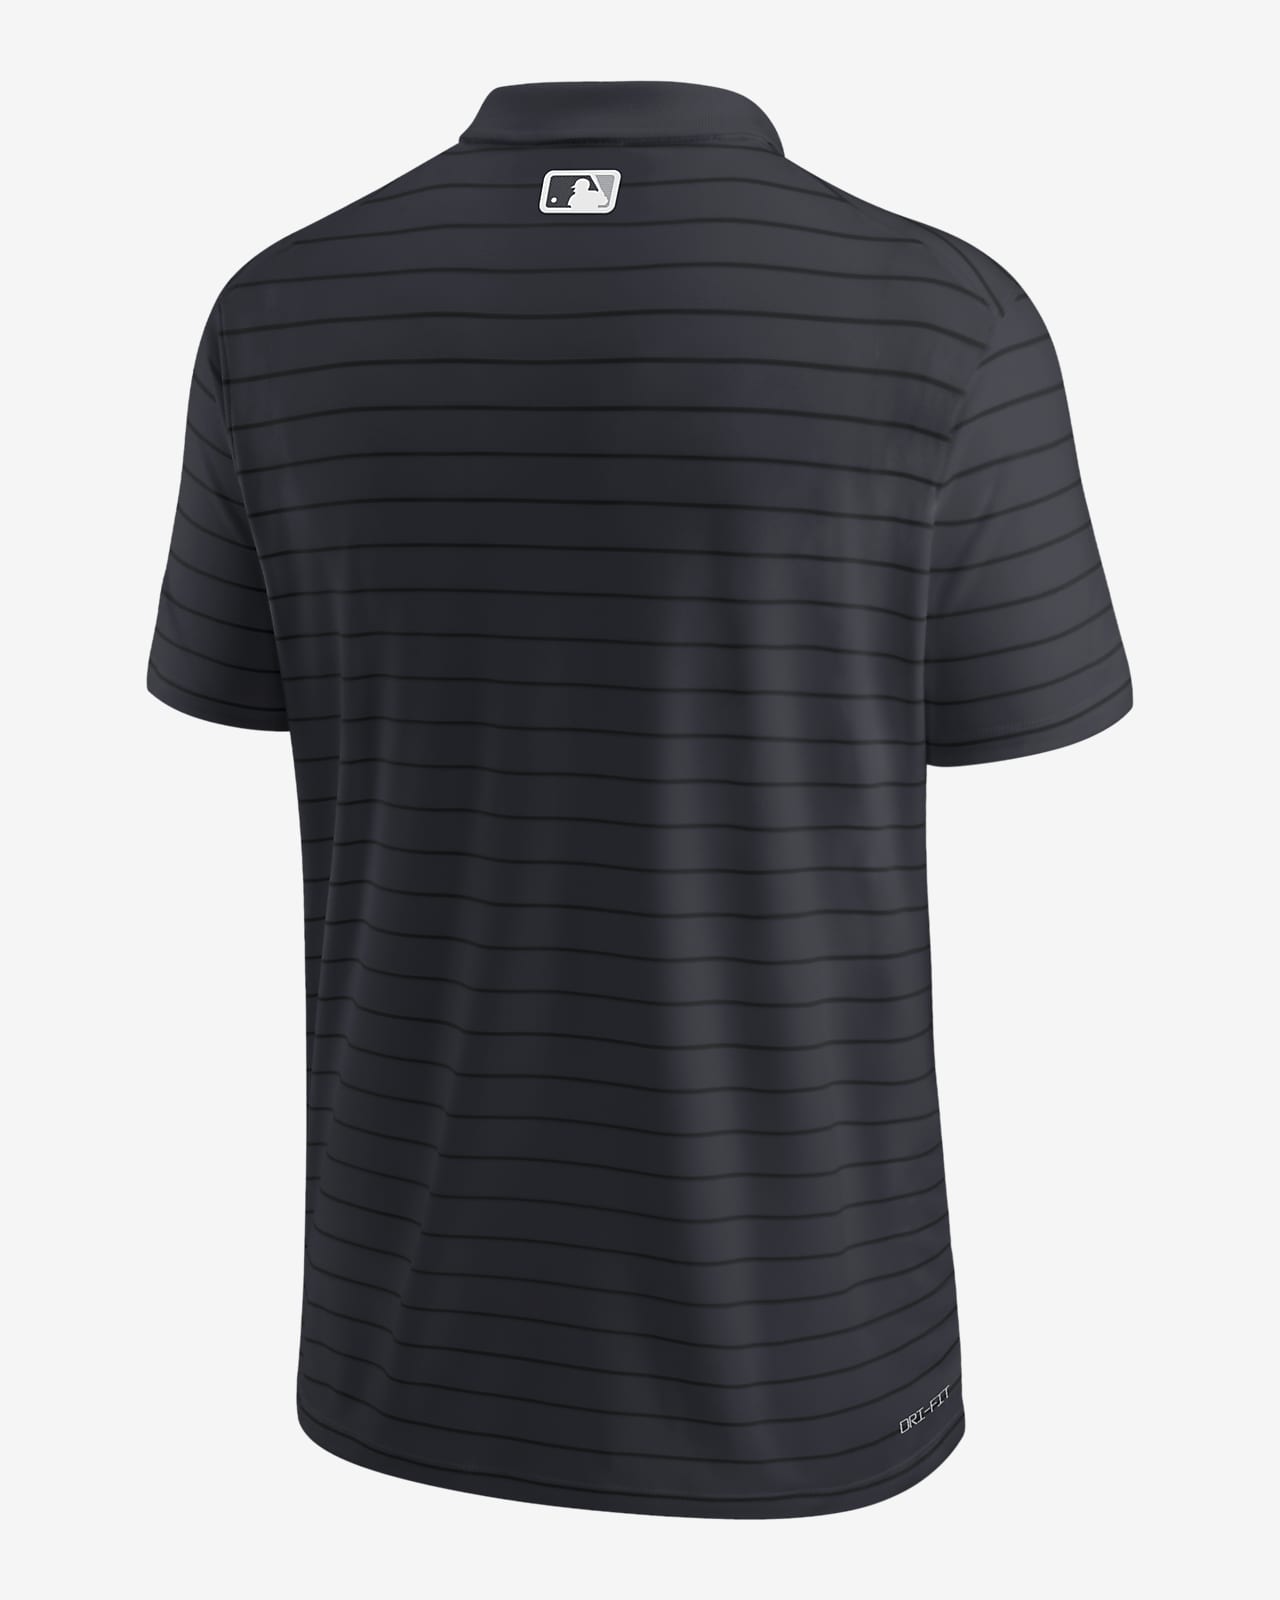 Nike Dri-FIT Striped (MLB New York Yankees) Men's Polo